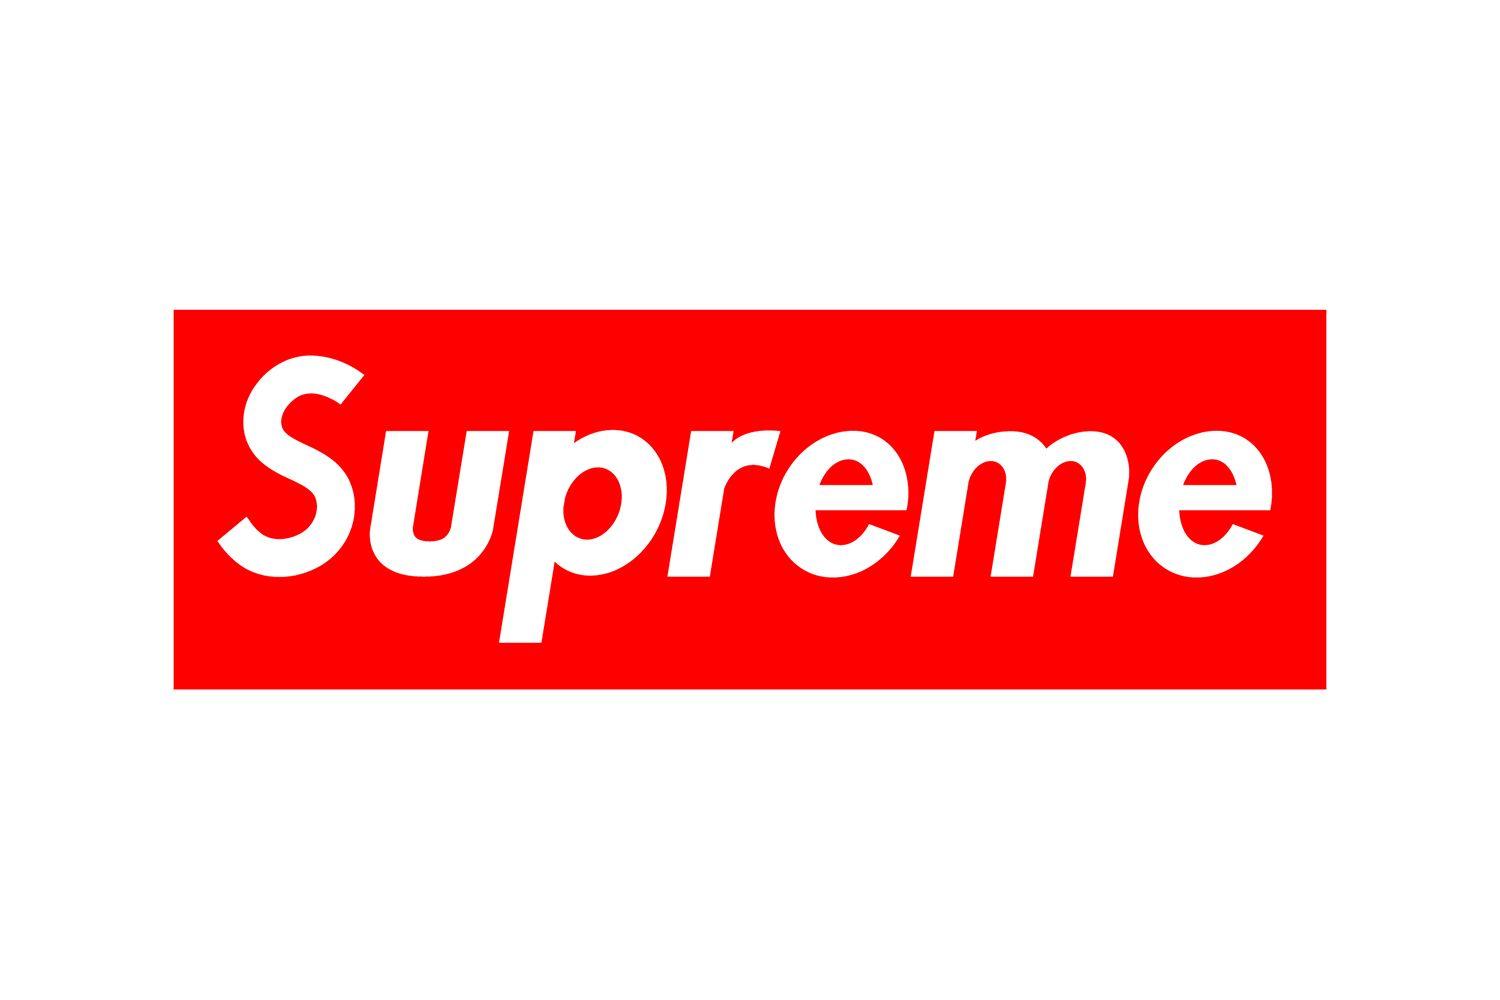 Supreme X Jordan Logo - Supreme x Air Jordan 5 Collaboration to Release Exclusively Online ...